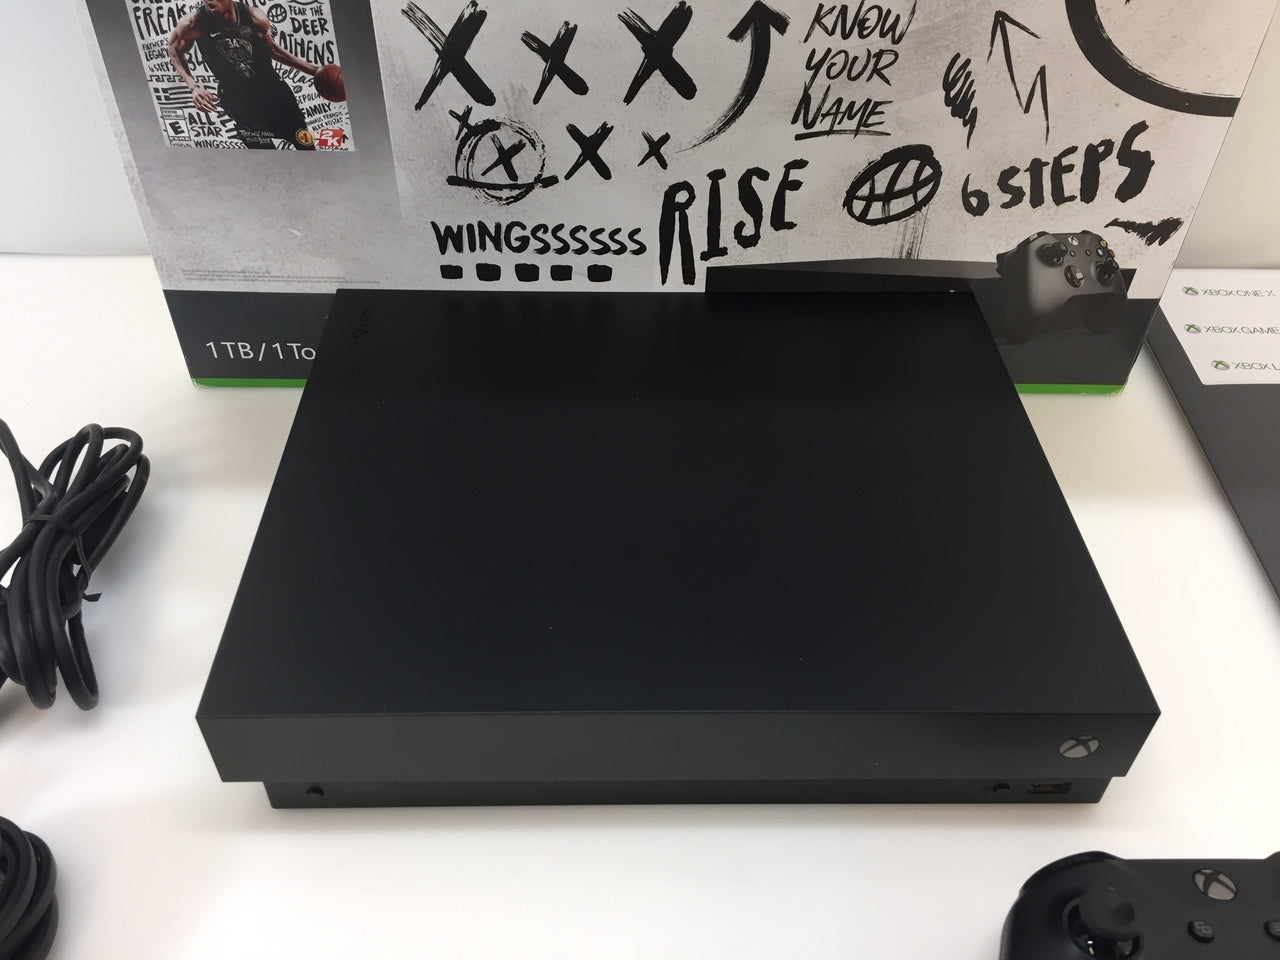 Microsoft Xbox One Console 1TB - Black